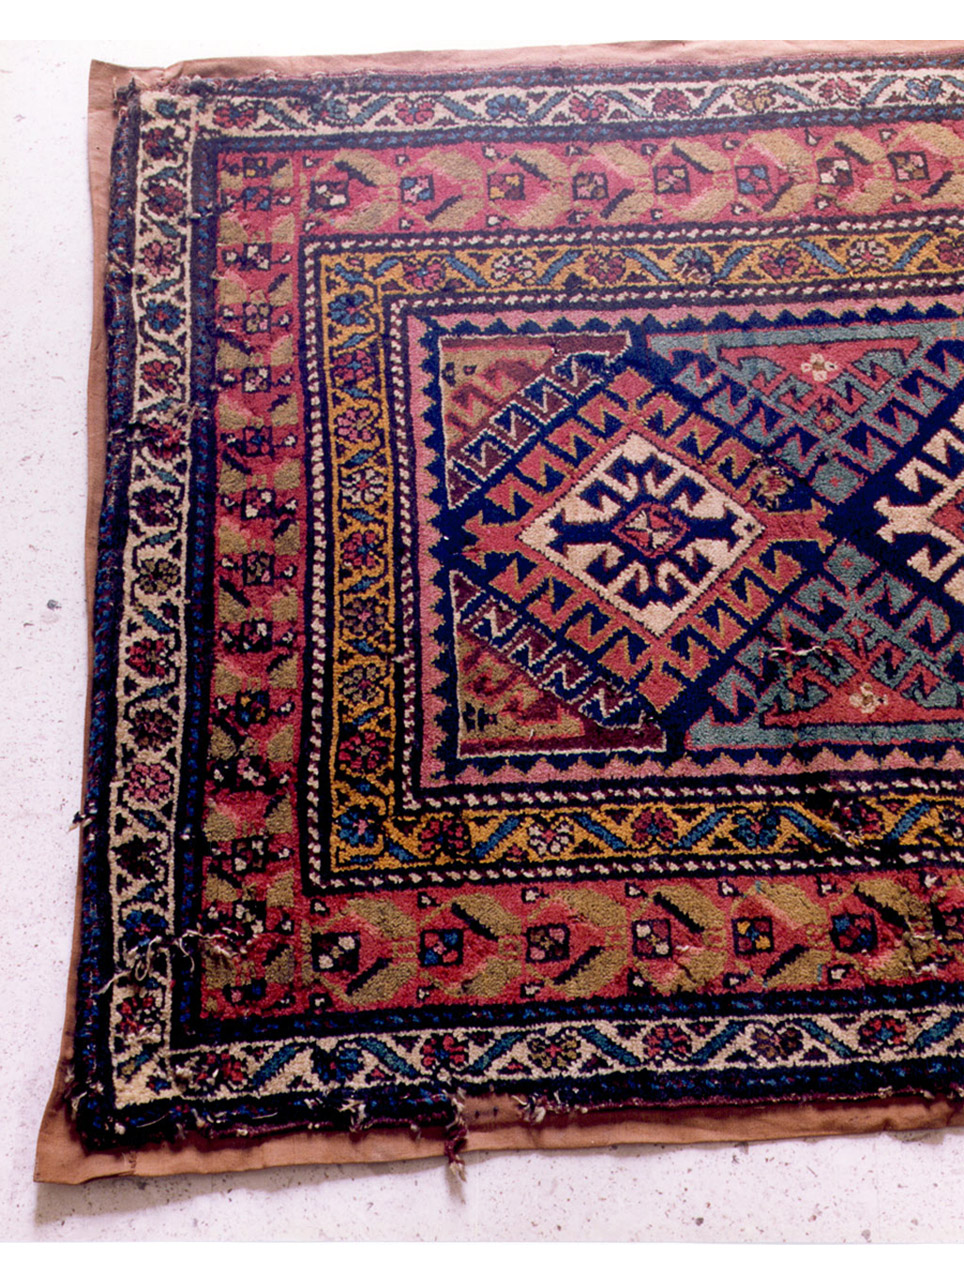 motivi decorativi vegetali stilizzati (tappeto) - manifattura russa (sec. XIX)